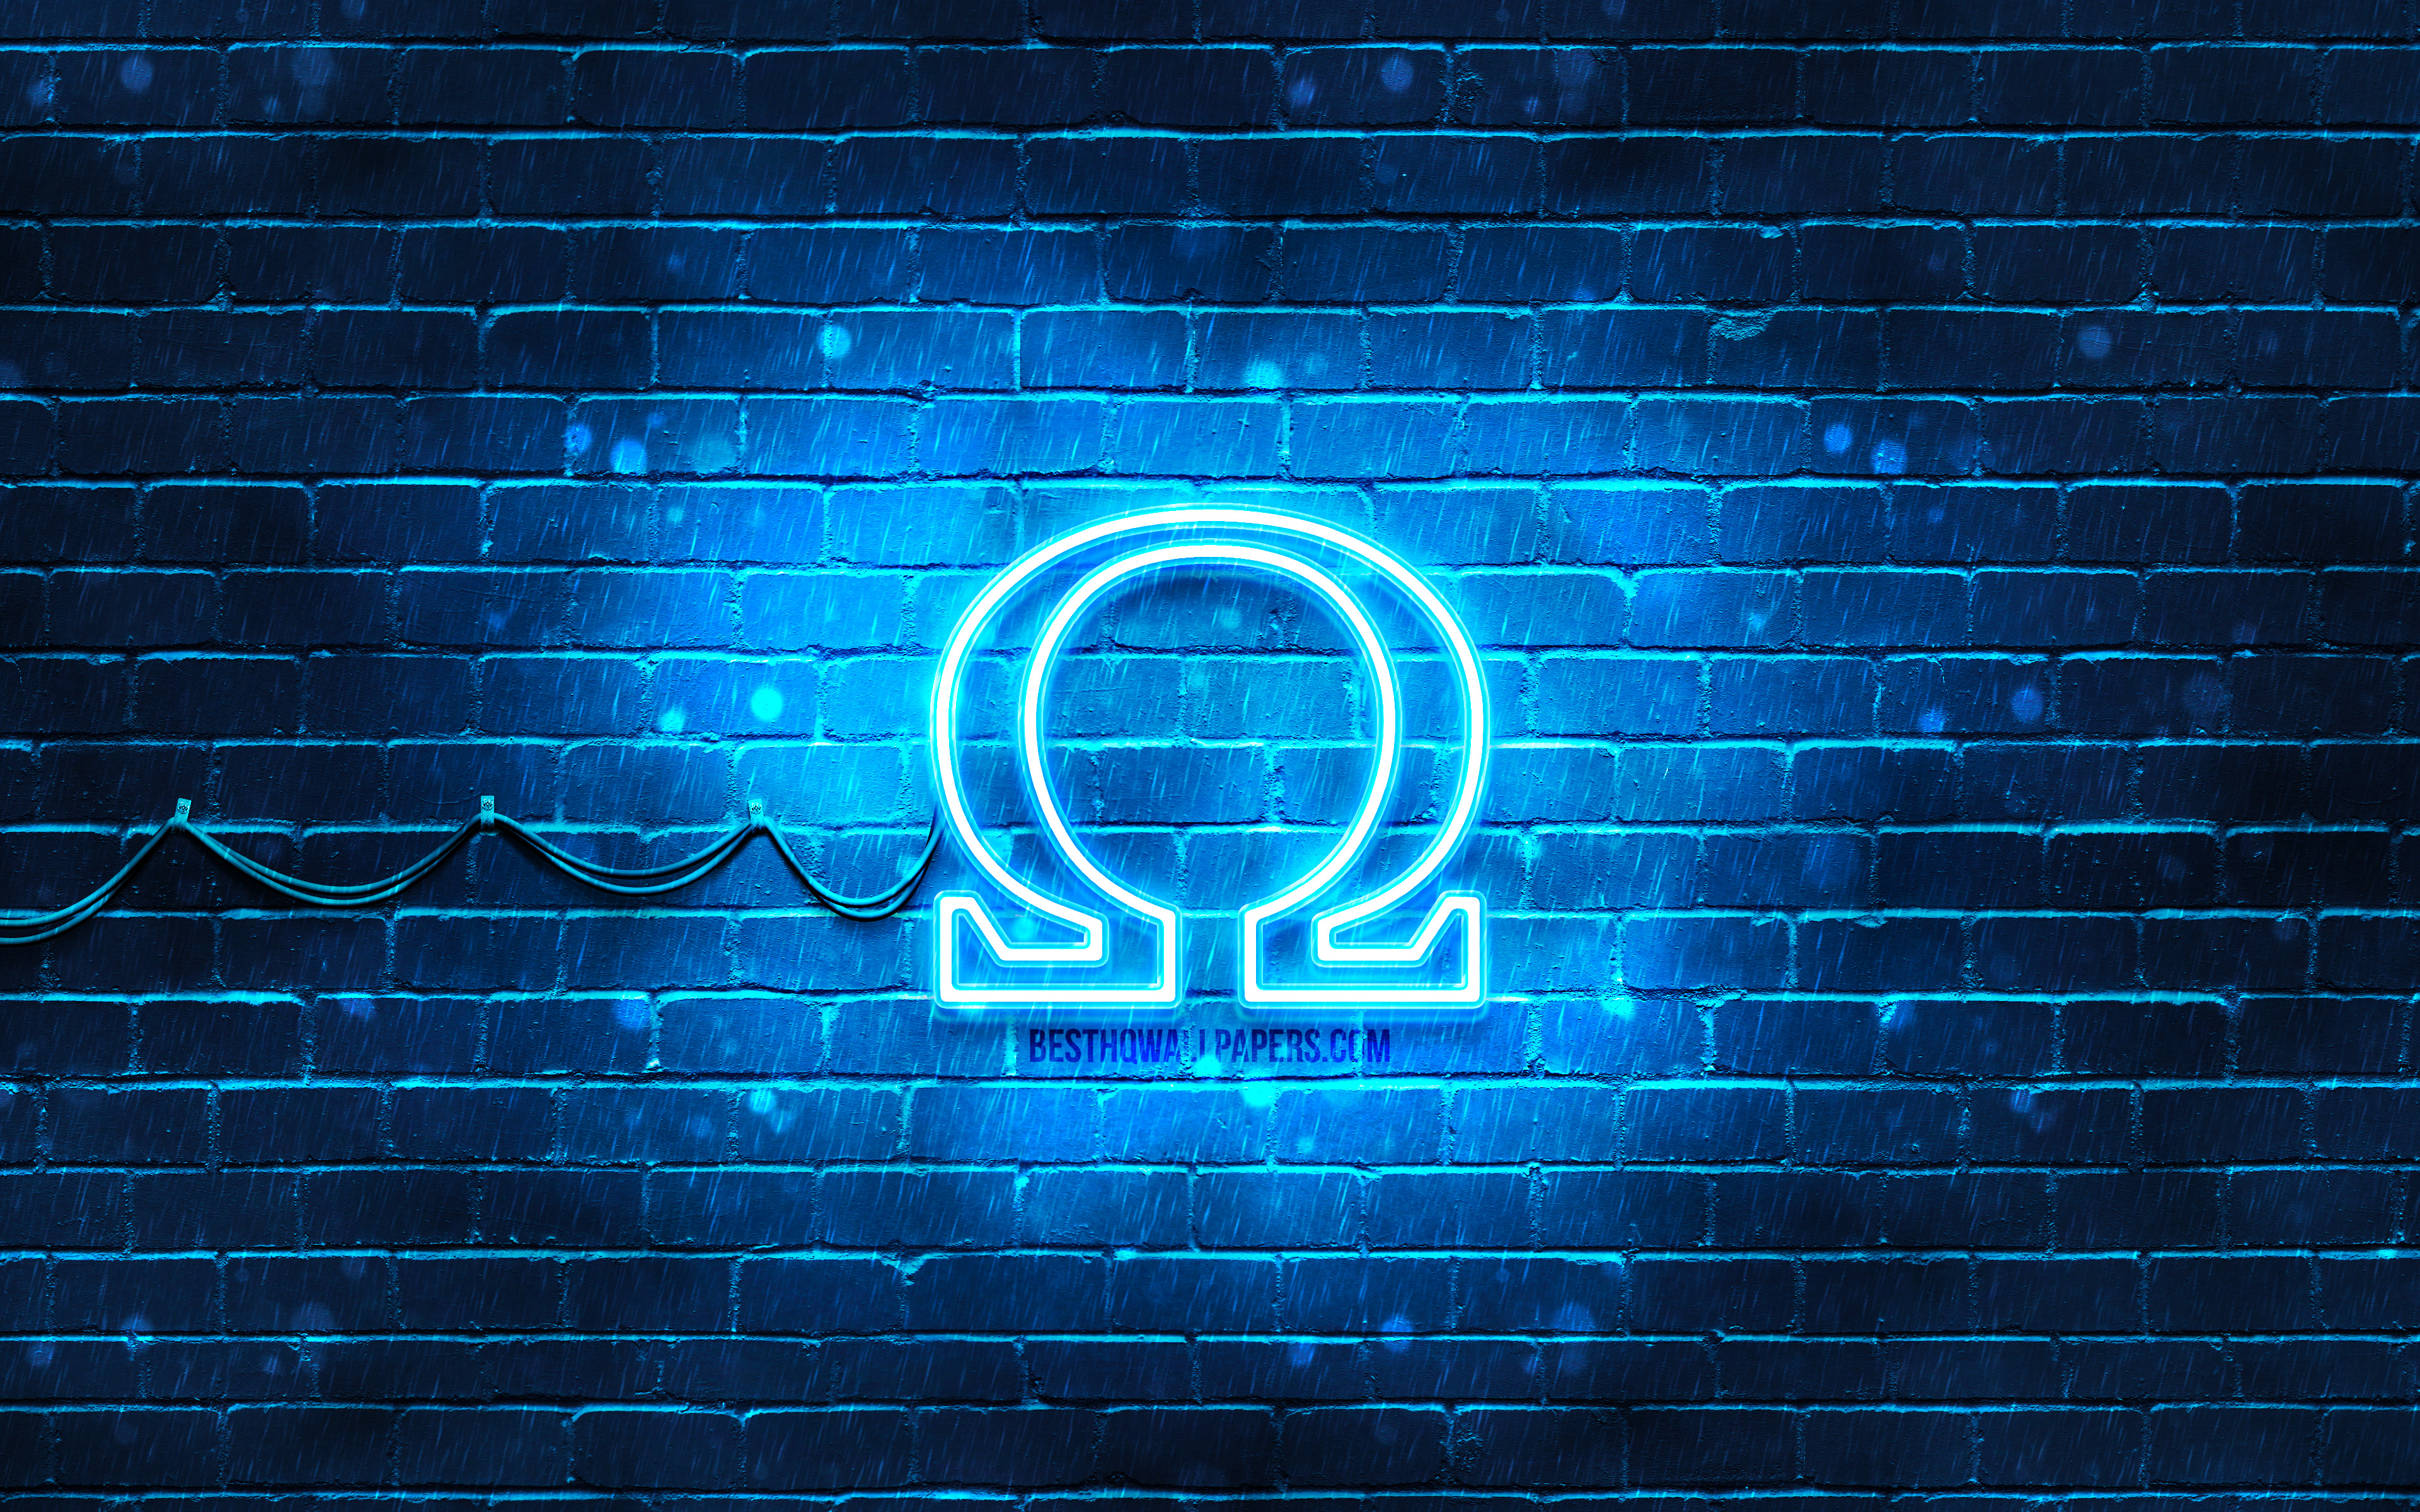 Download wallpaper Omega blue logo, 4k, blue brickwall, Omega logo, fashion brands, Omega neon logo, Omega for desktop with resolution 3840x2400. High Quality HD picture wallpaper